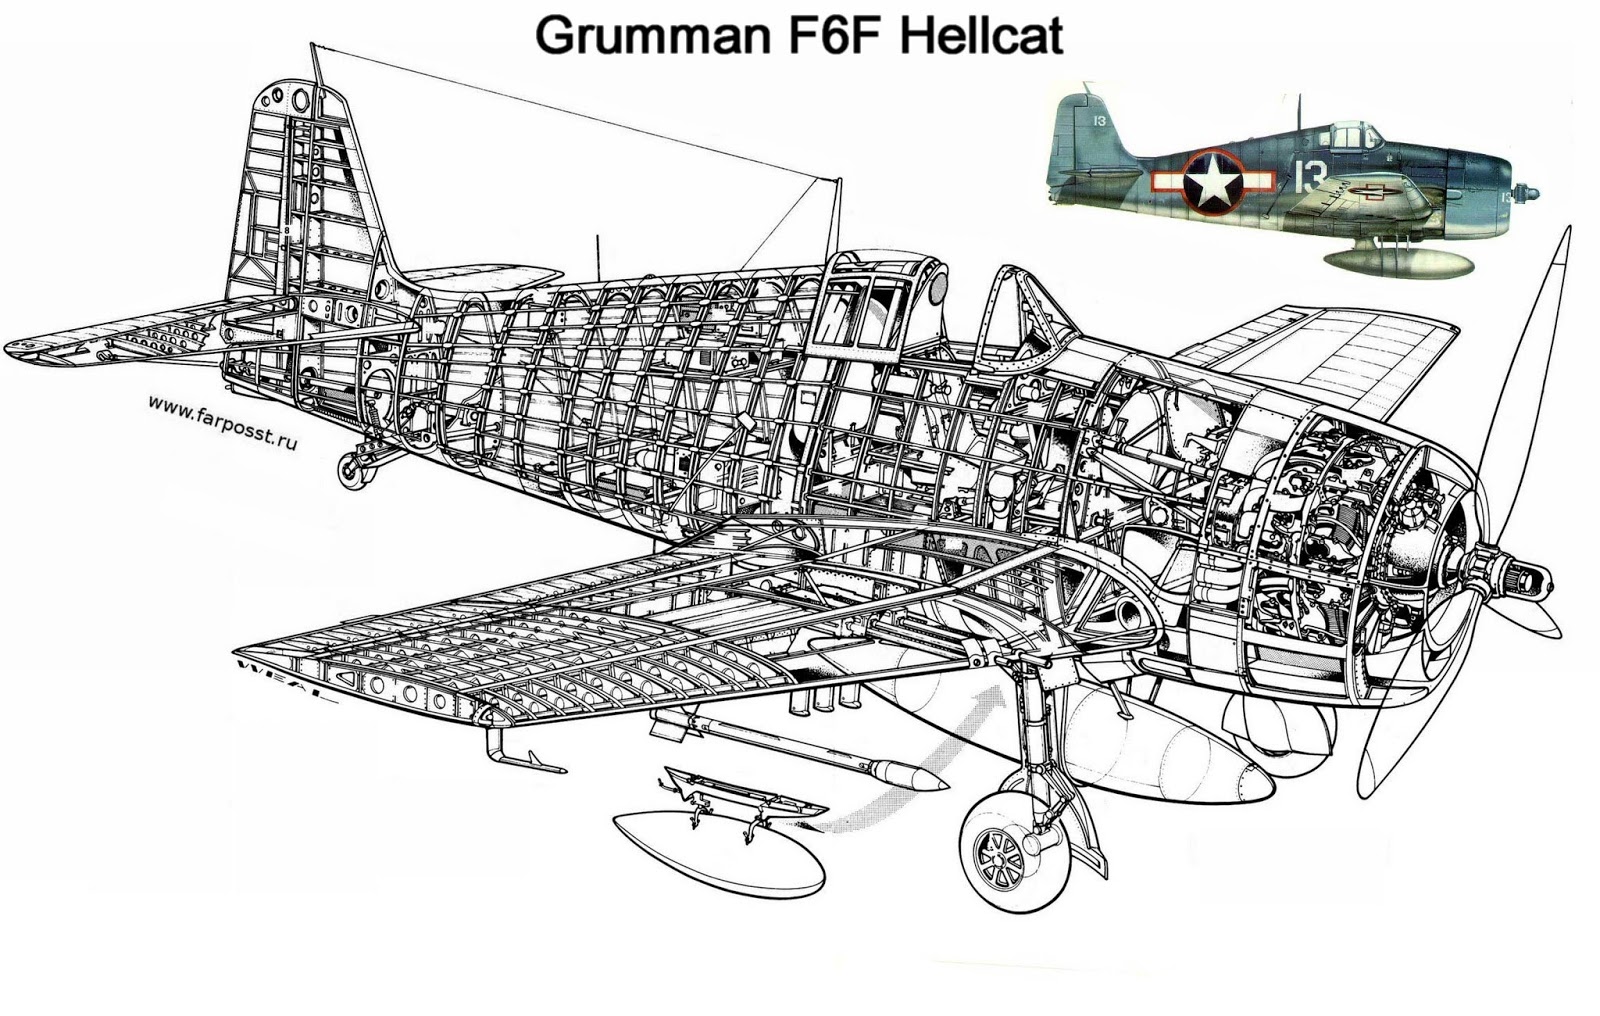 Grumman F6F Hellcat Backgrounds, Compatible - PC, Mobile, Gadgets| 1600x1016 px